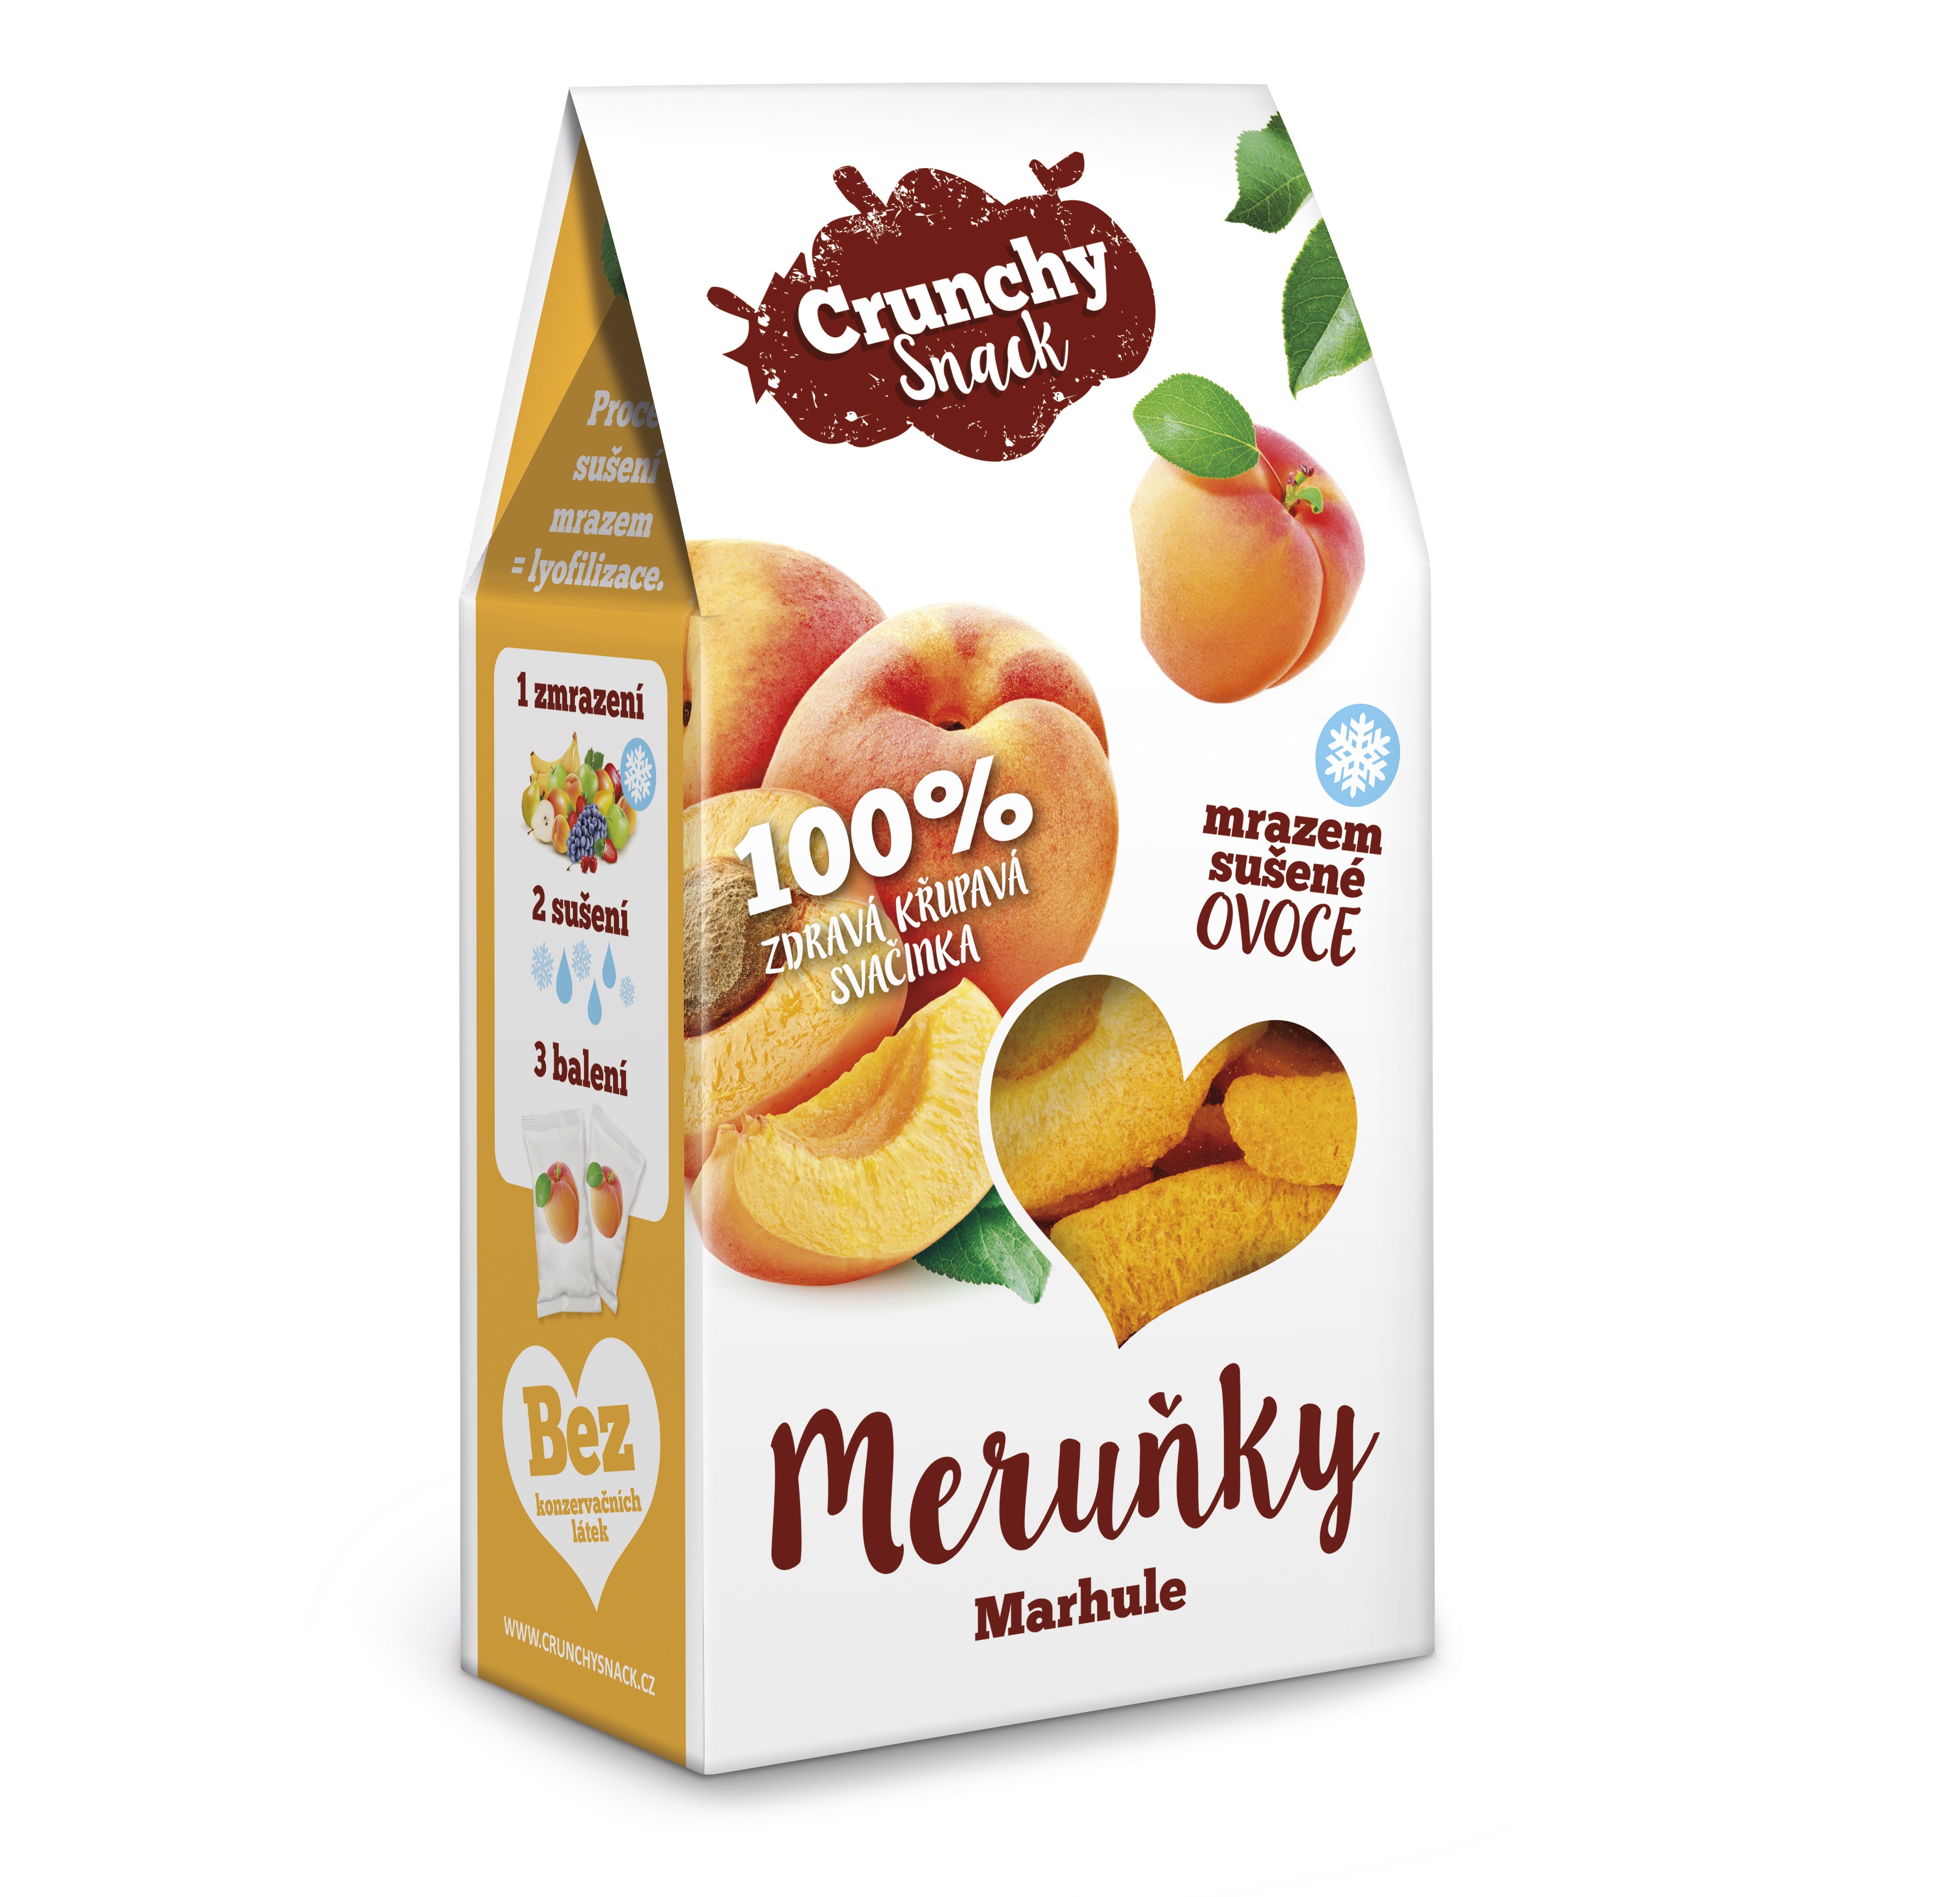 Crunchy snack Merunkyct